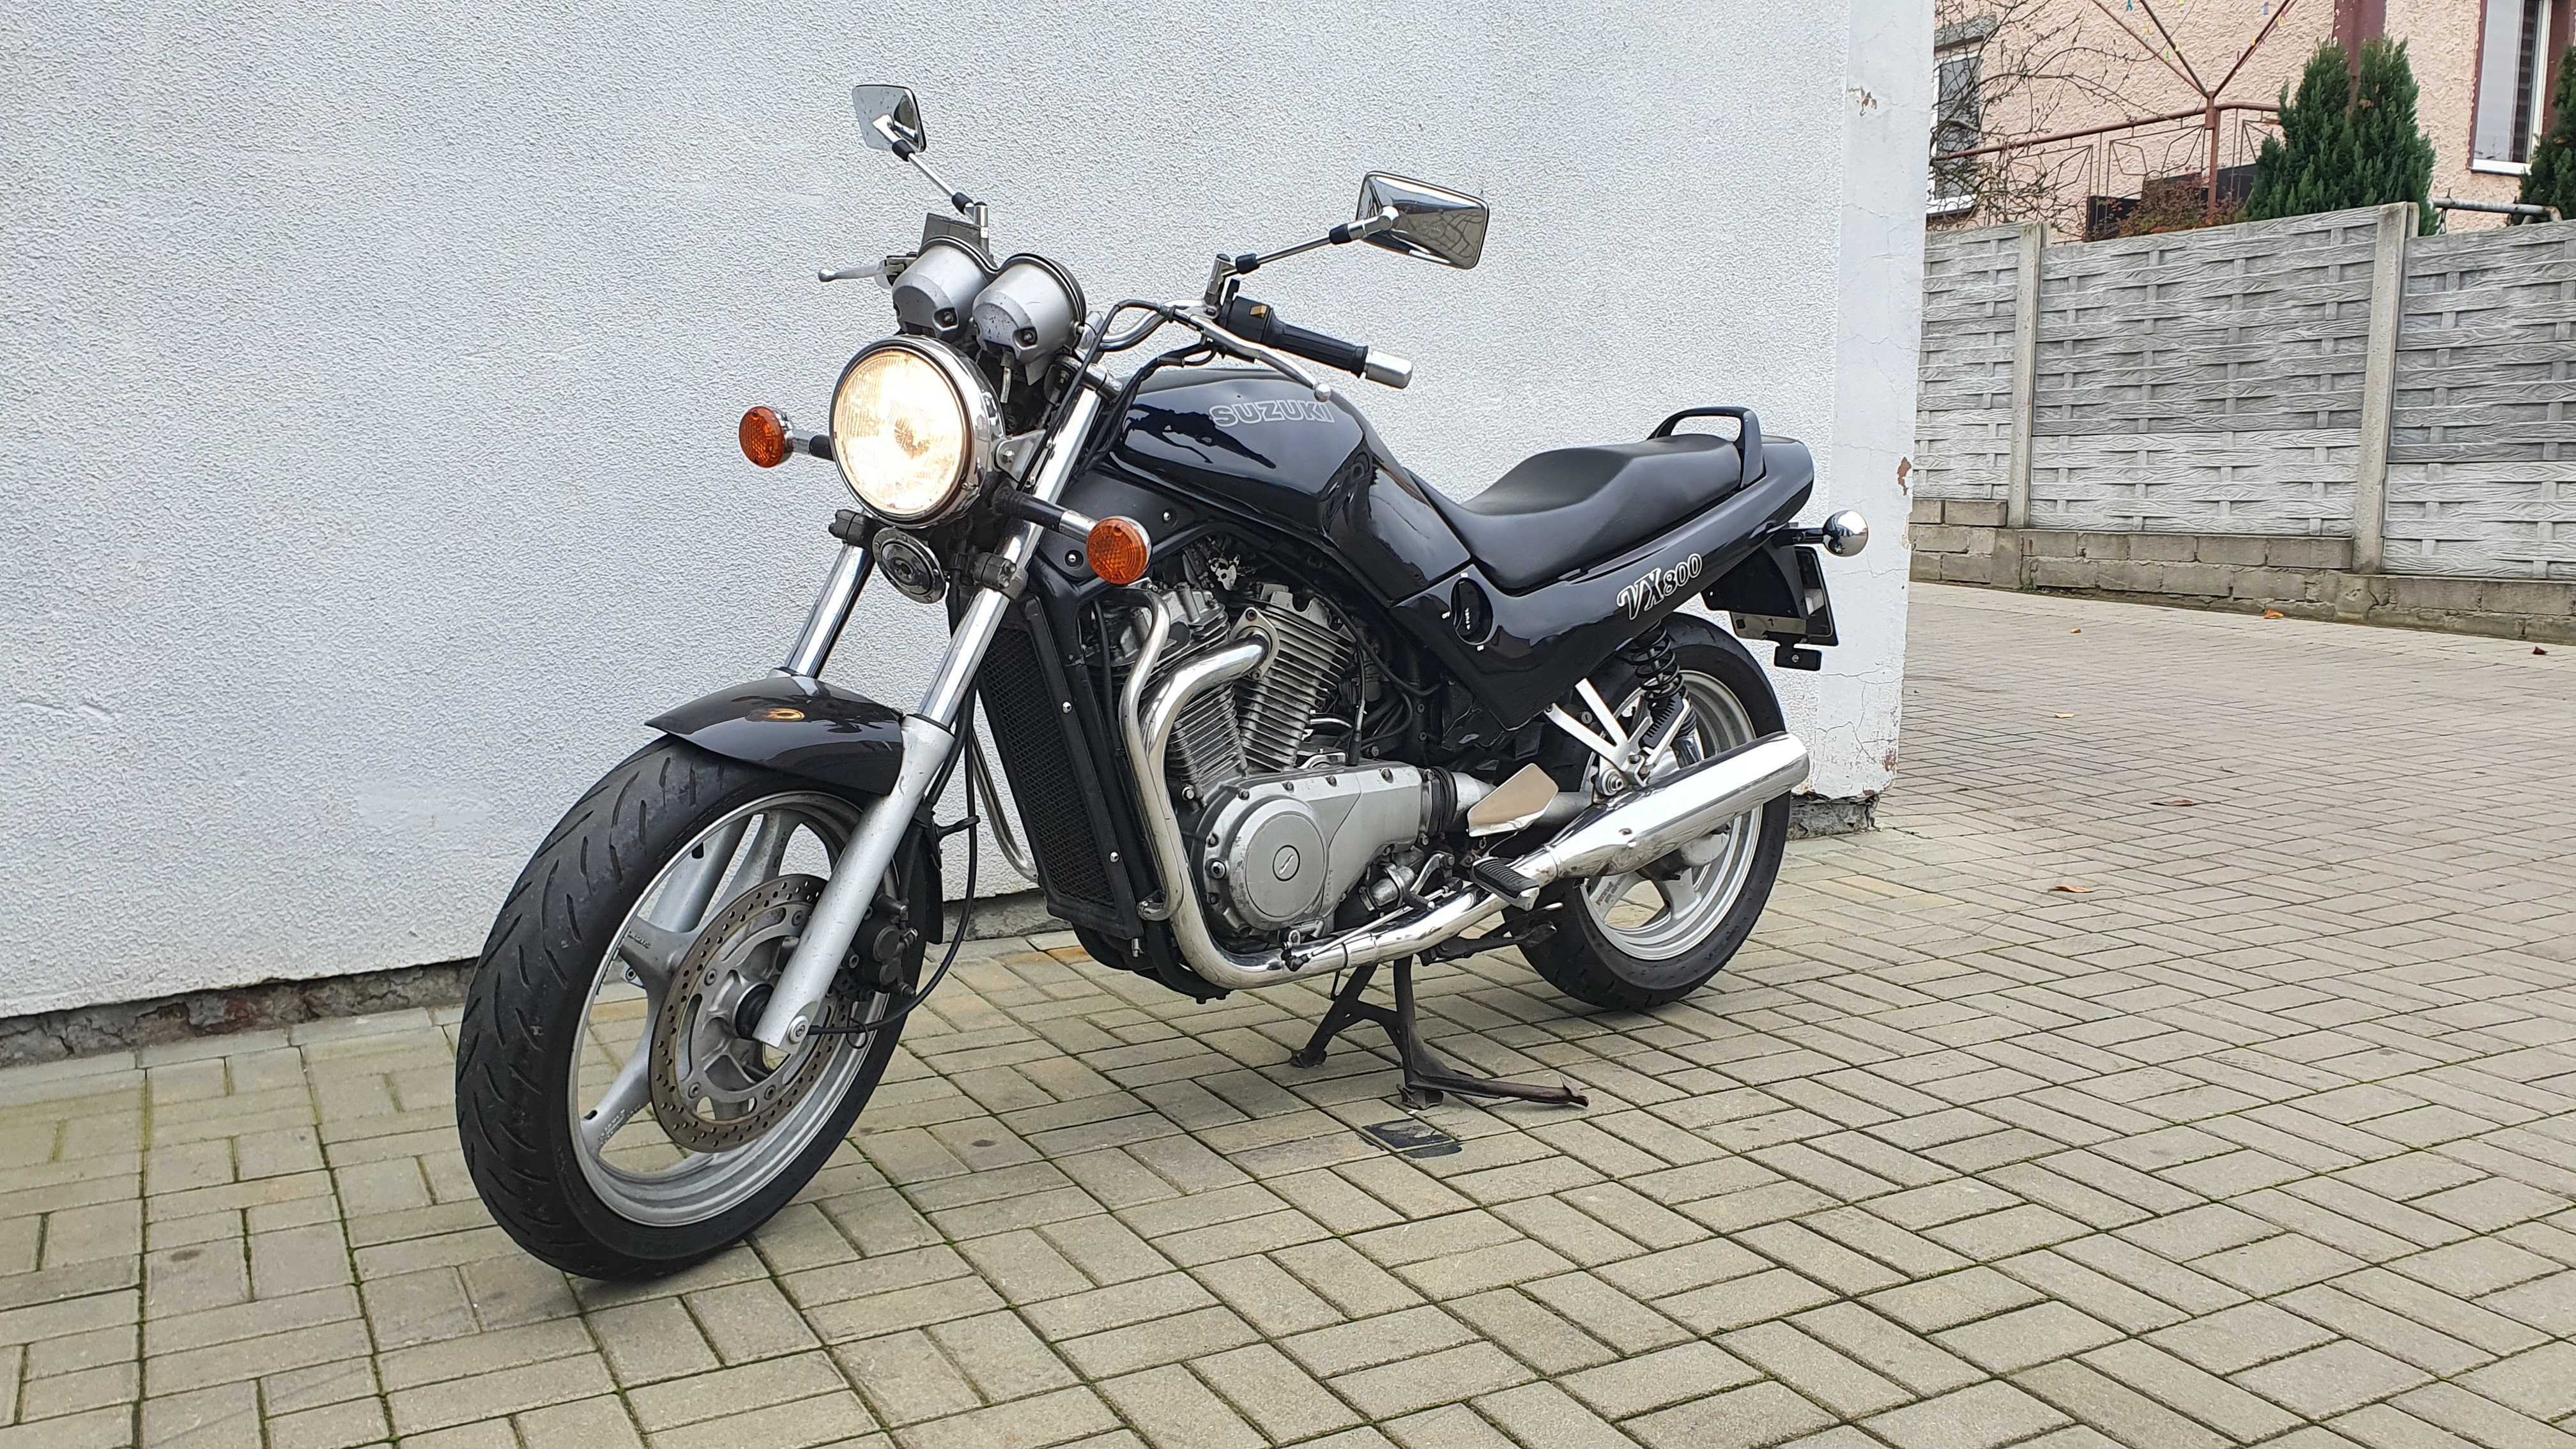 Suzuki VX800 motocykl naked z 1990 r.